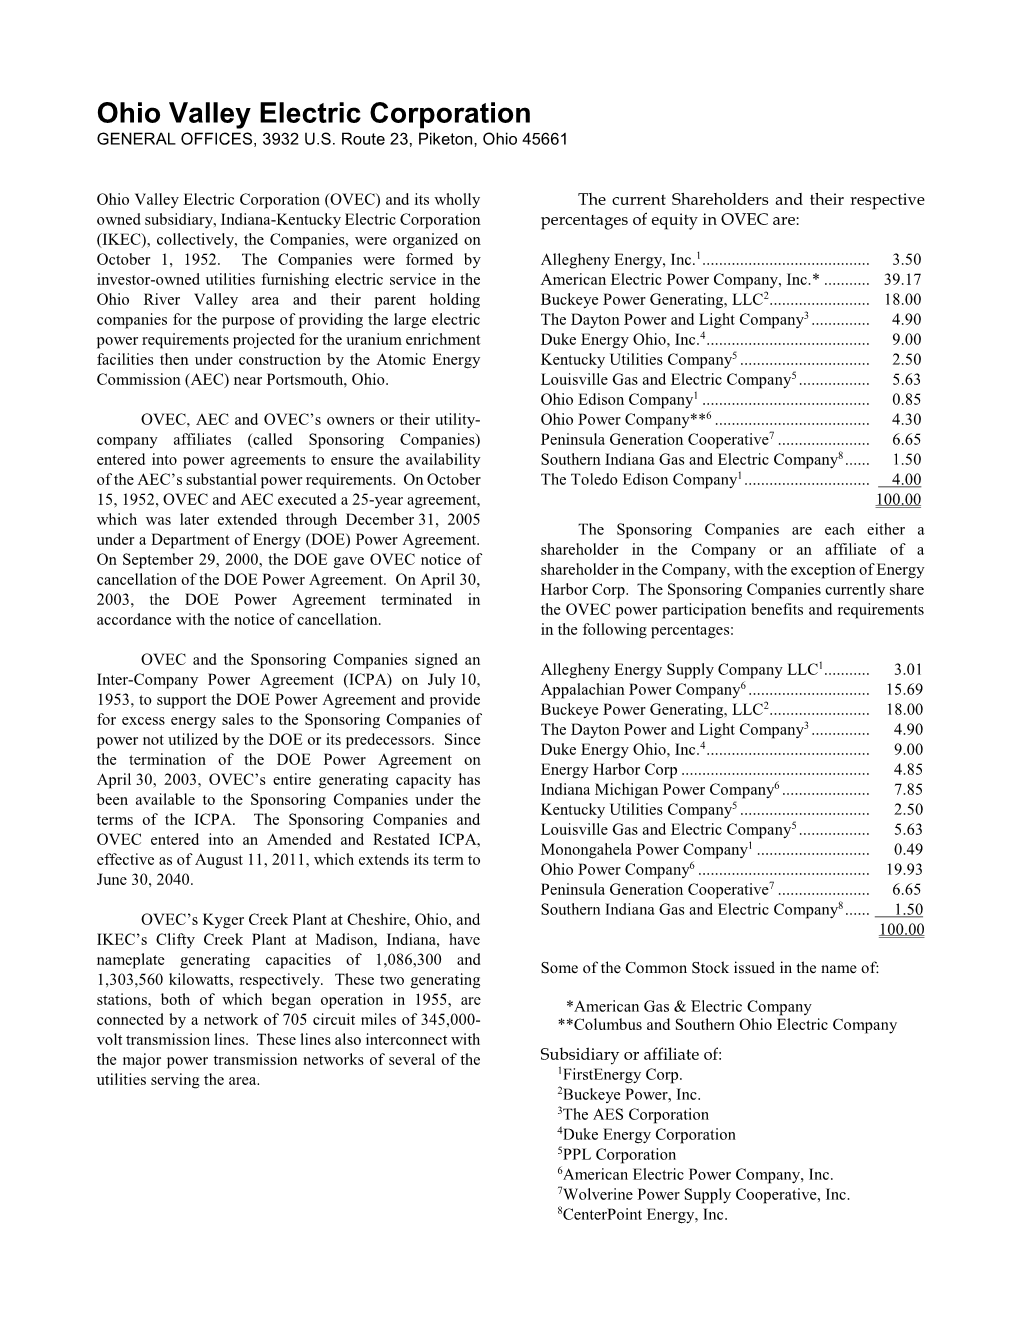 Annual Report — 1998